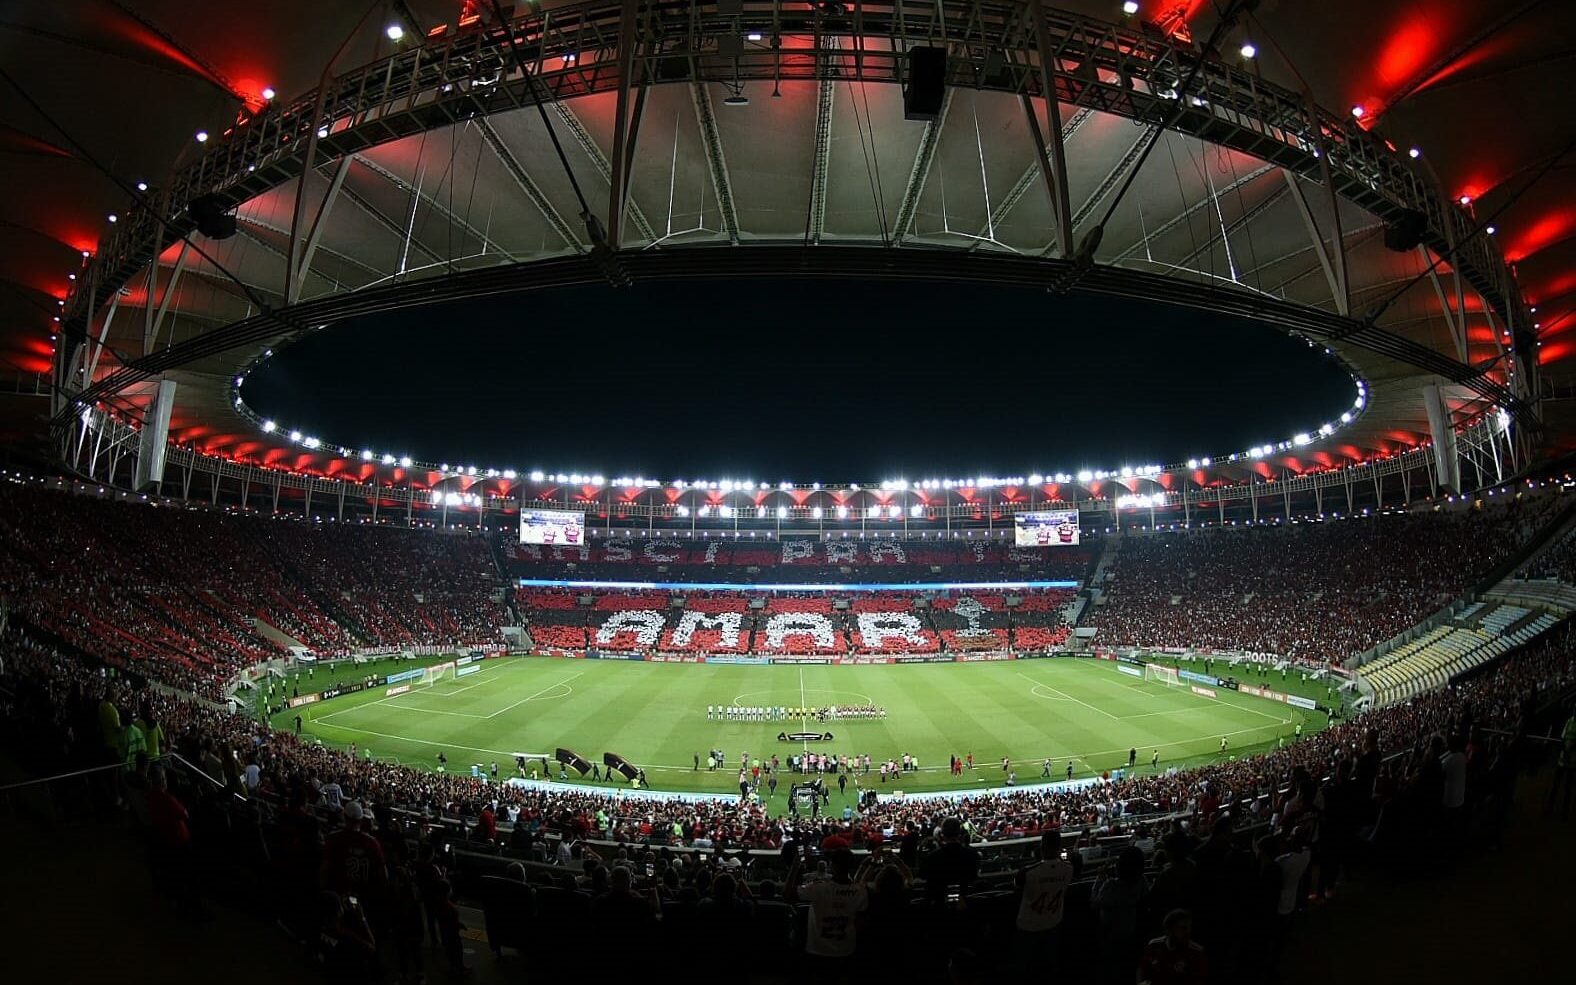 Resultado de Flamengo x Olimpia pela Libertadores - Lance!